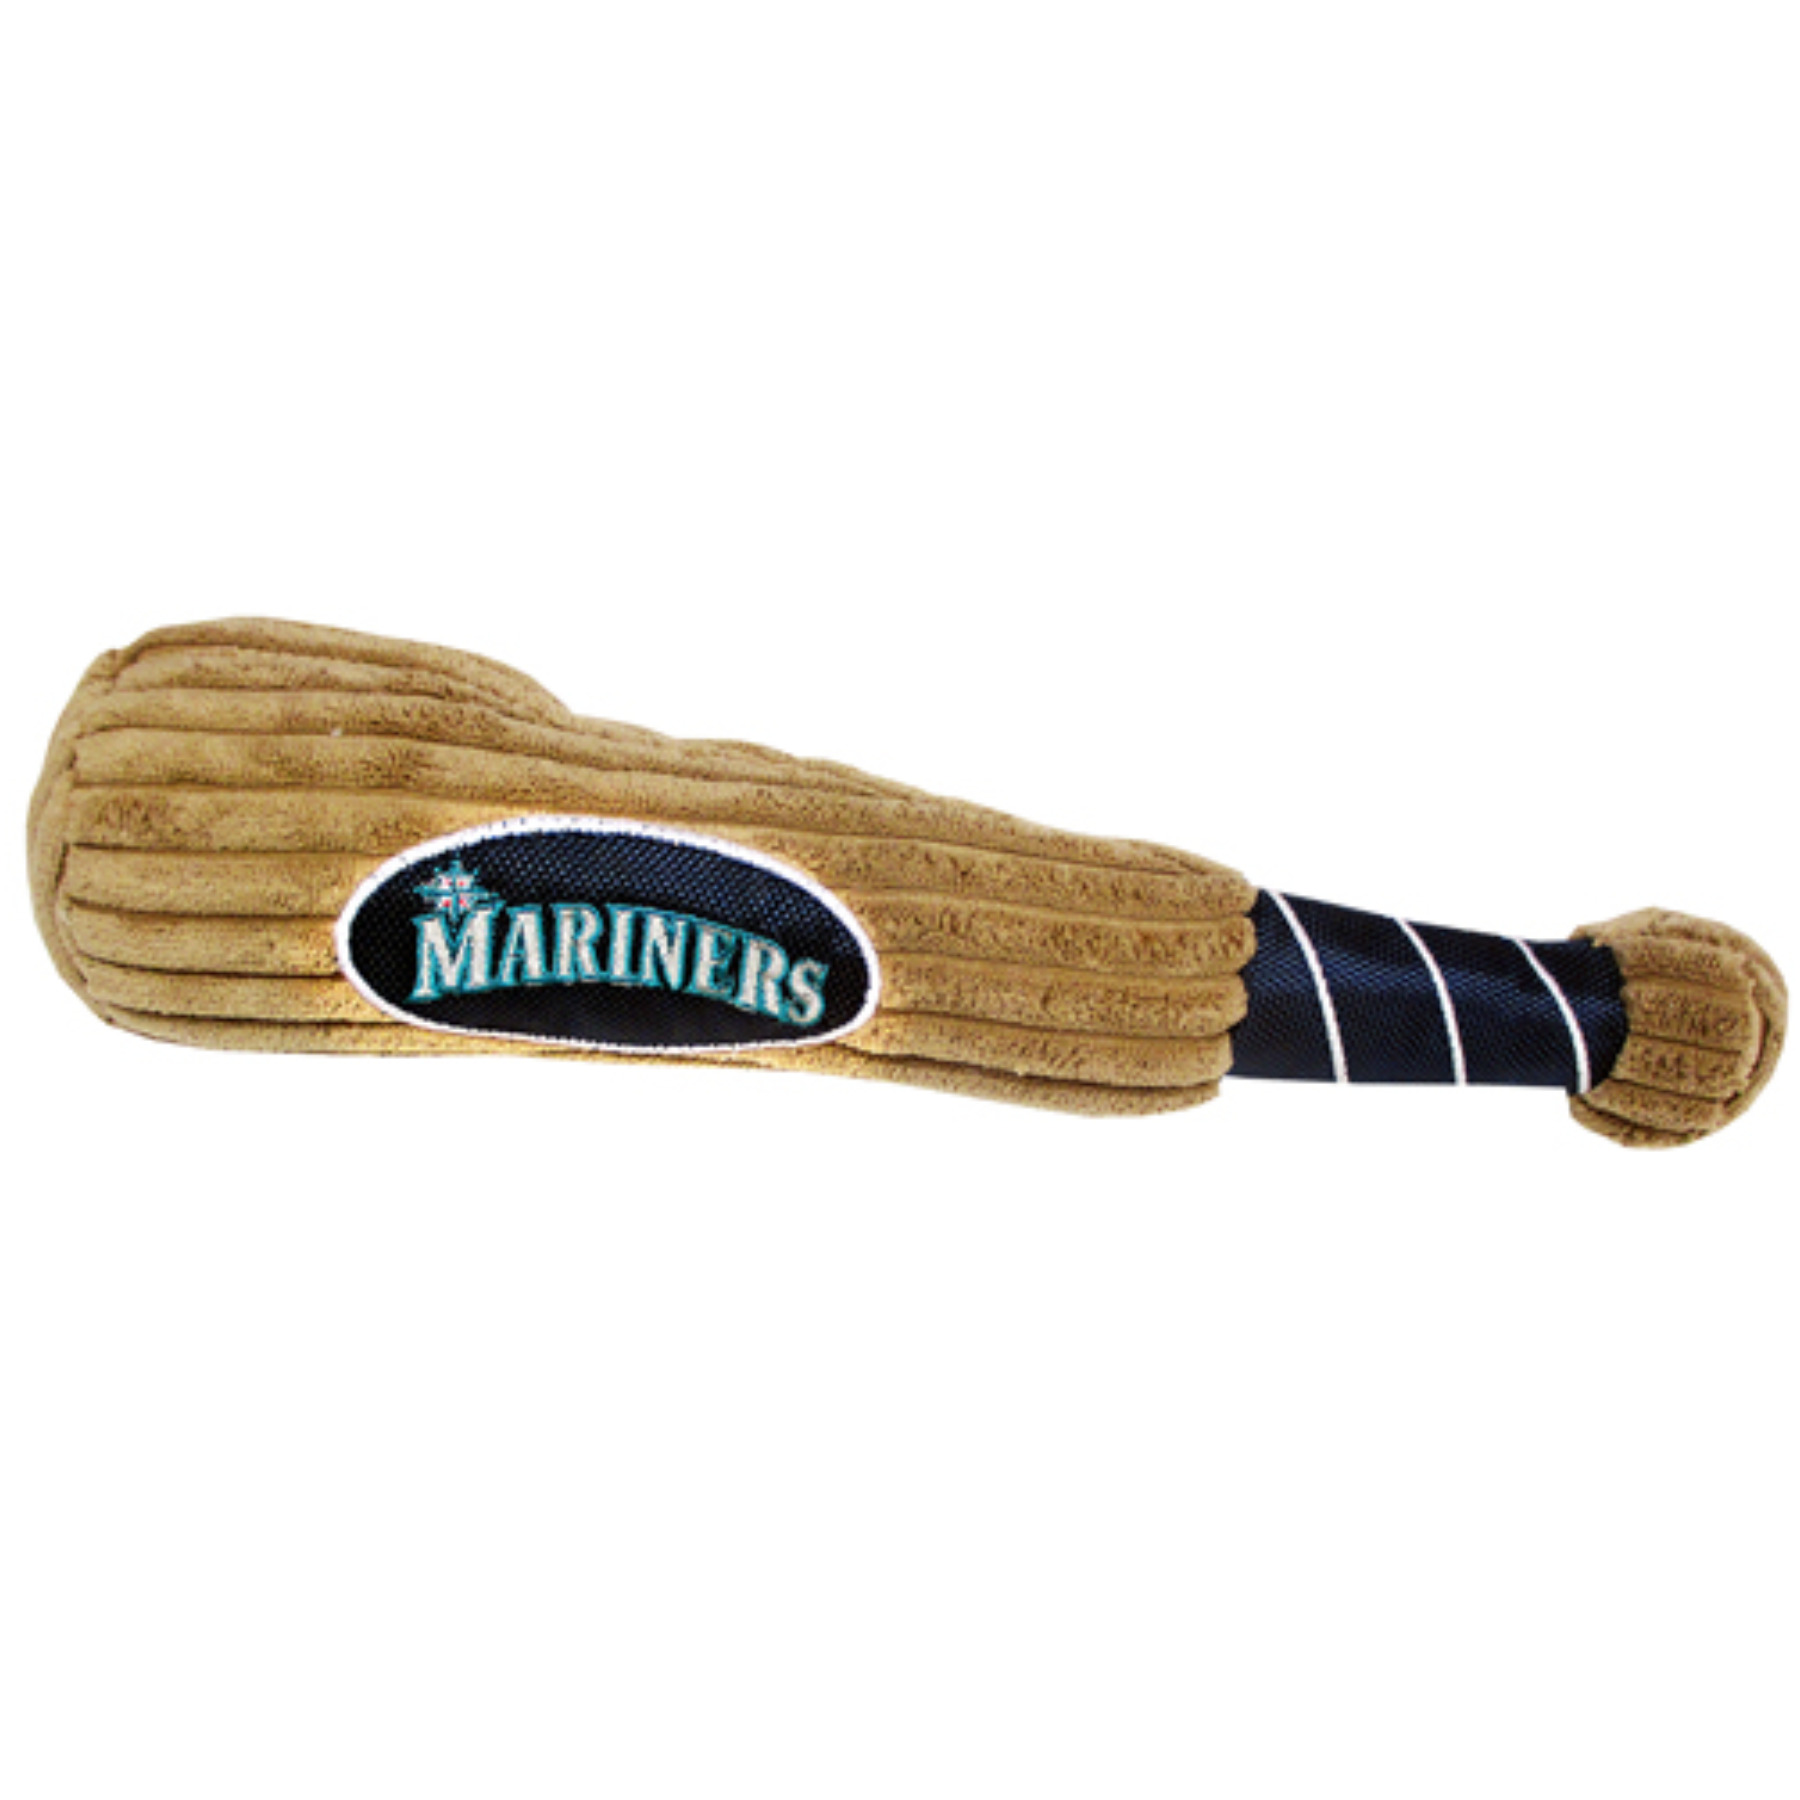 Seattle Mariners Bat Toy